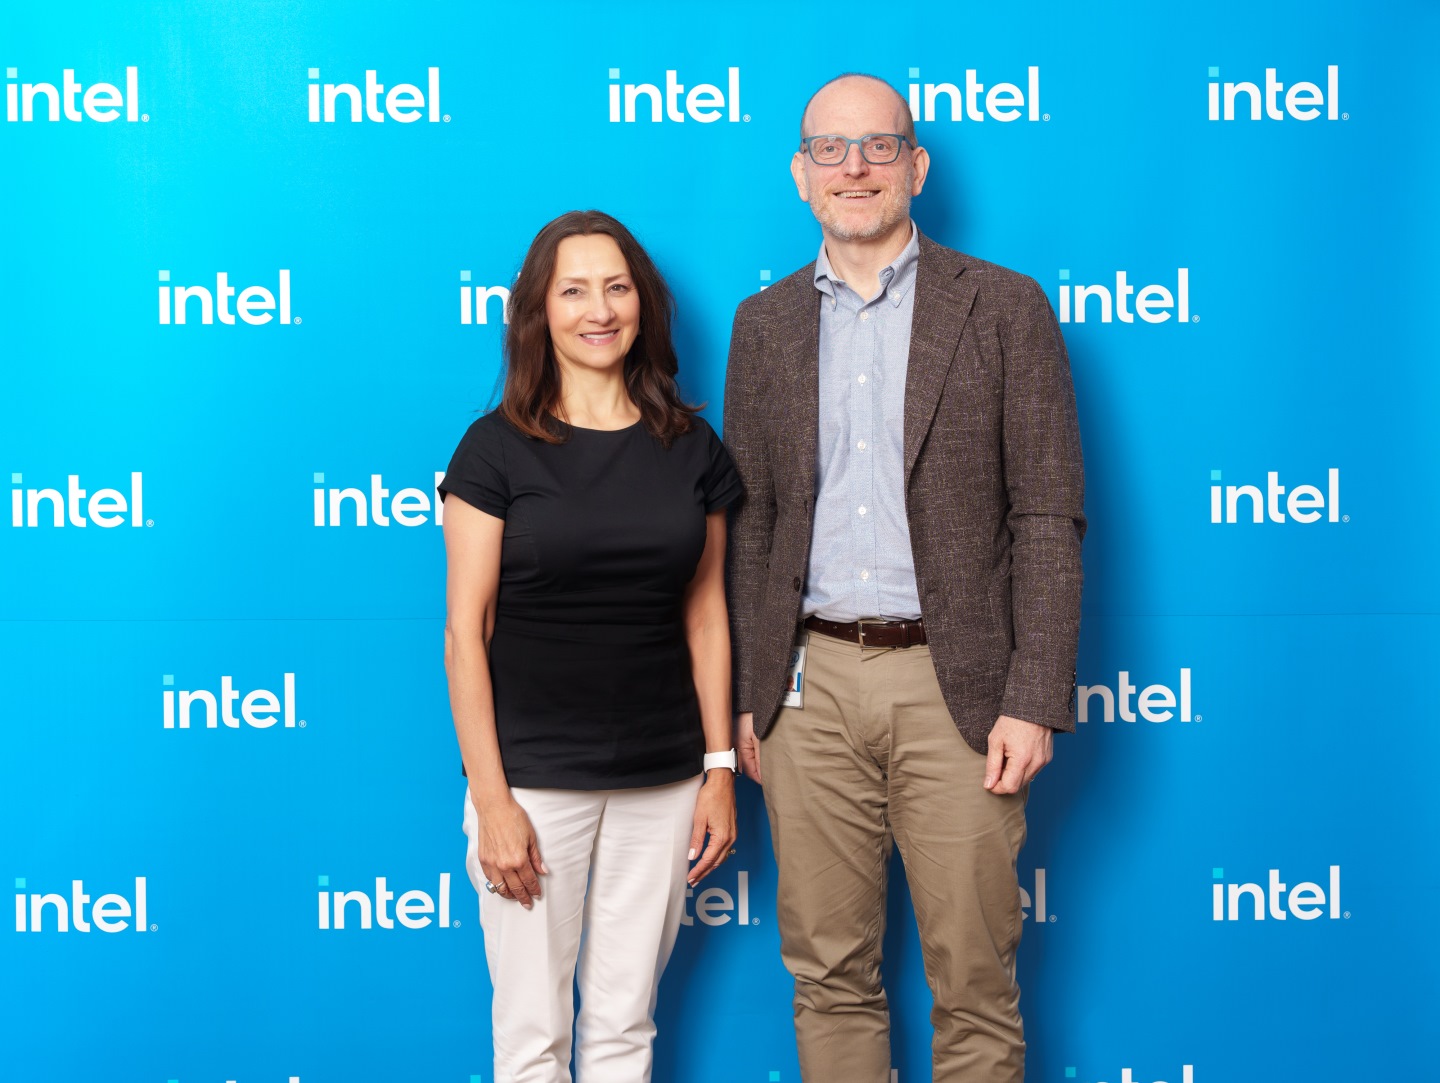 Intel執行副總裁暨資料心與AI事群總經理Sandra Rivera（左）與企副總裁暨資料心與AI事群 - 資料心平台工程與架構事部總經理Zane Ball（右），透過訪談說明發展略並交流觀點。